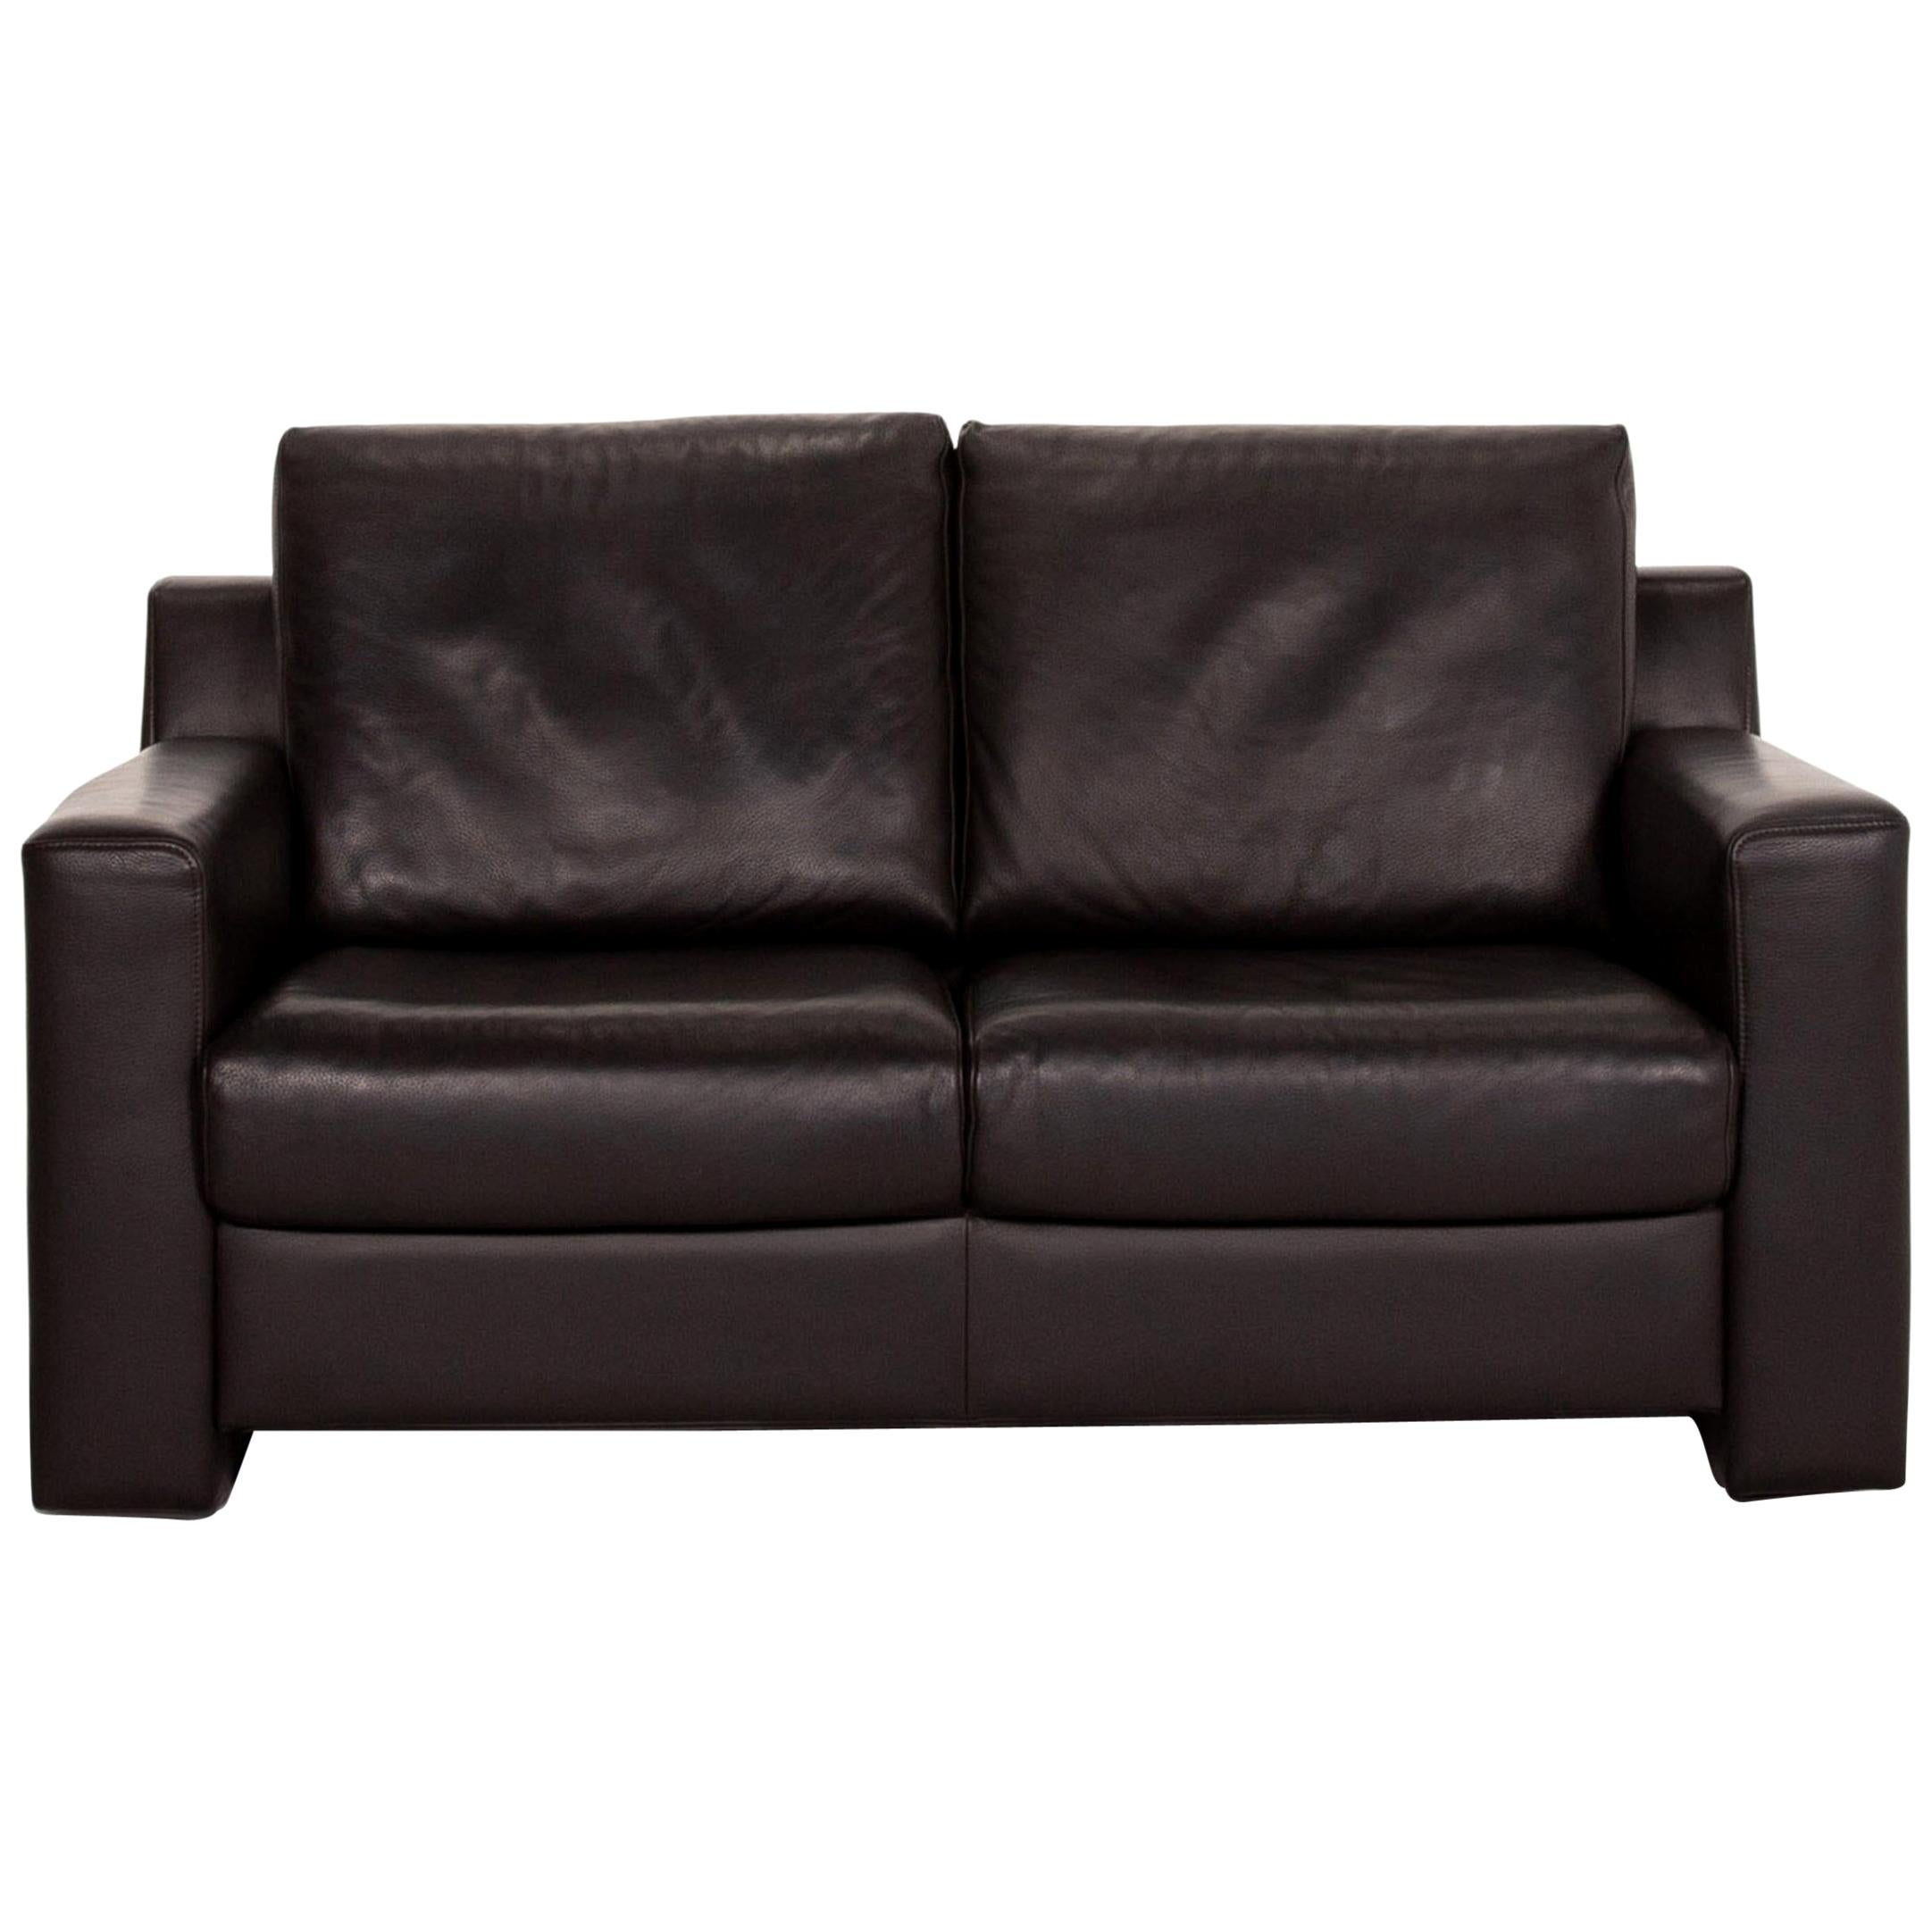 Ewald Schillig Flex Plus Leather Sofa Dark Brown Black Brown Two-Seat Couch For Sale